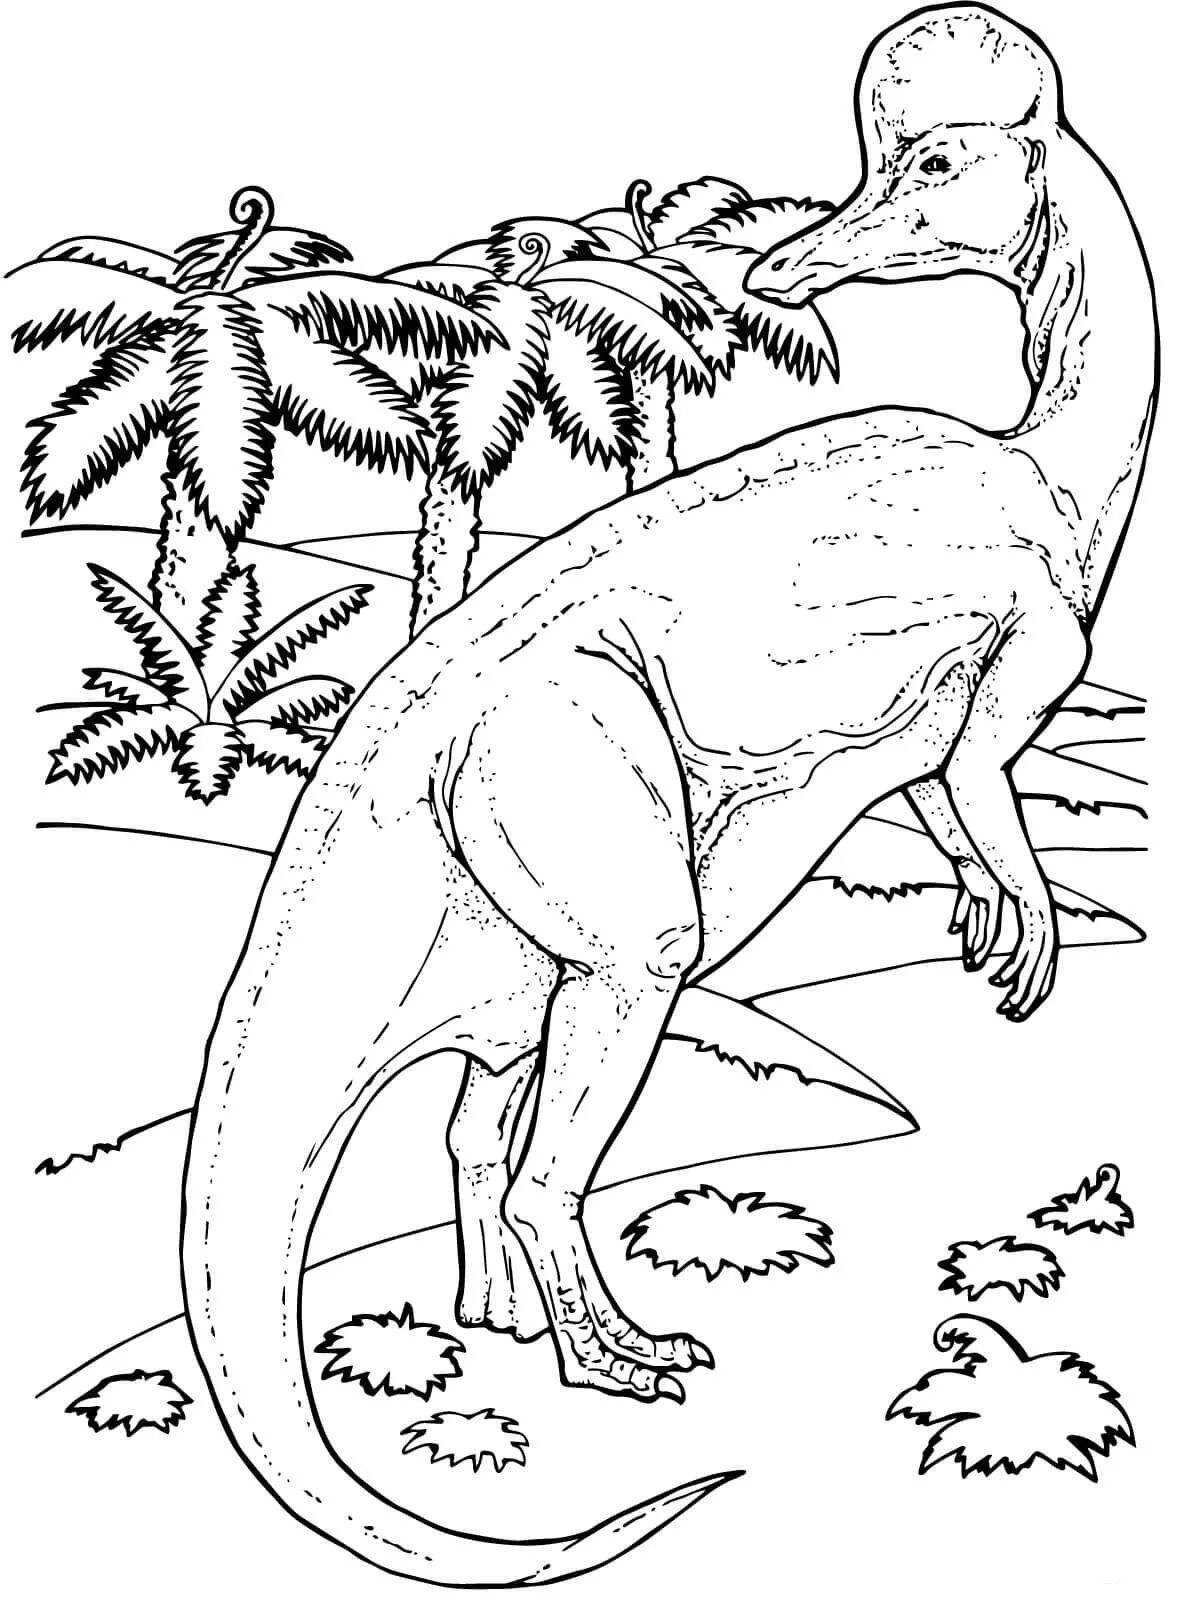 Regal Jurassic dinosaur coloring page